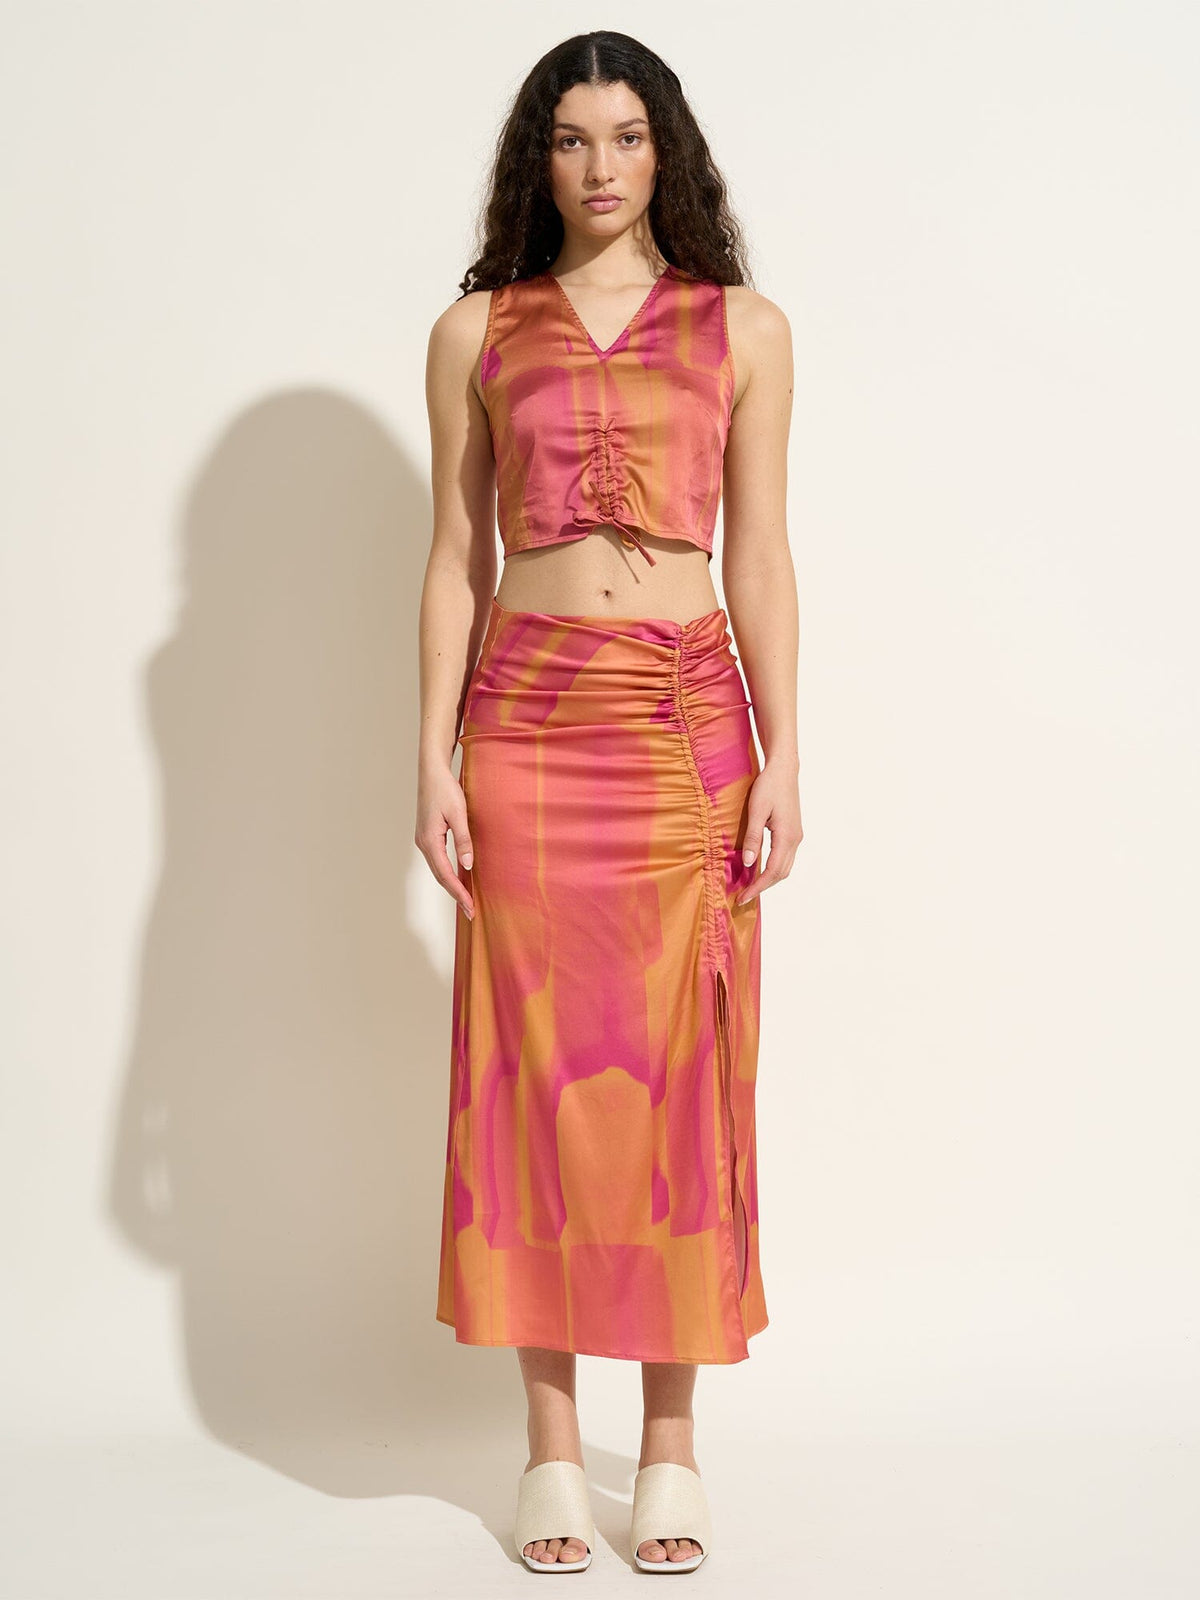 BEATTY - Slit midi skirt with adjustable length in Tie & Dye Fuchsia printed viscose satin Skirt Fête Impériale